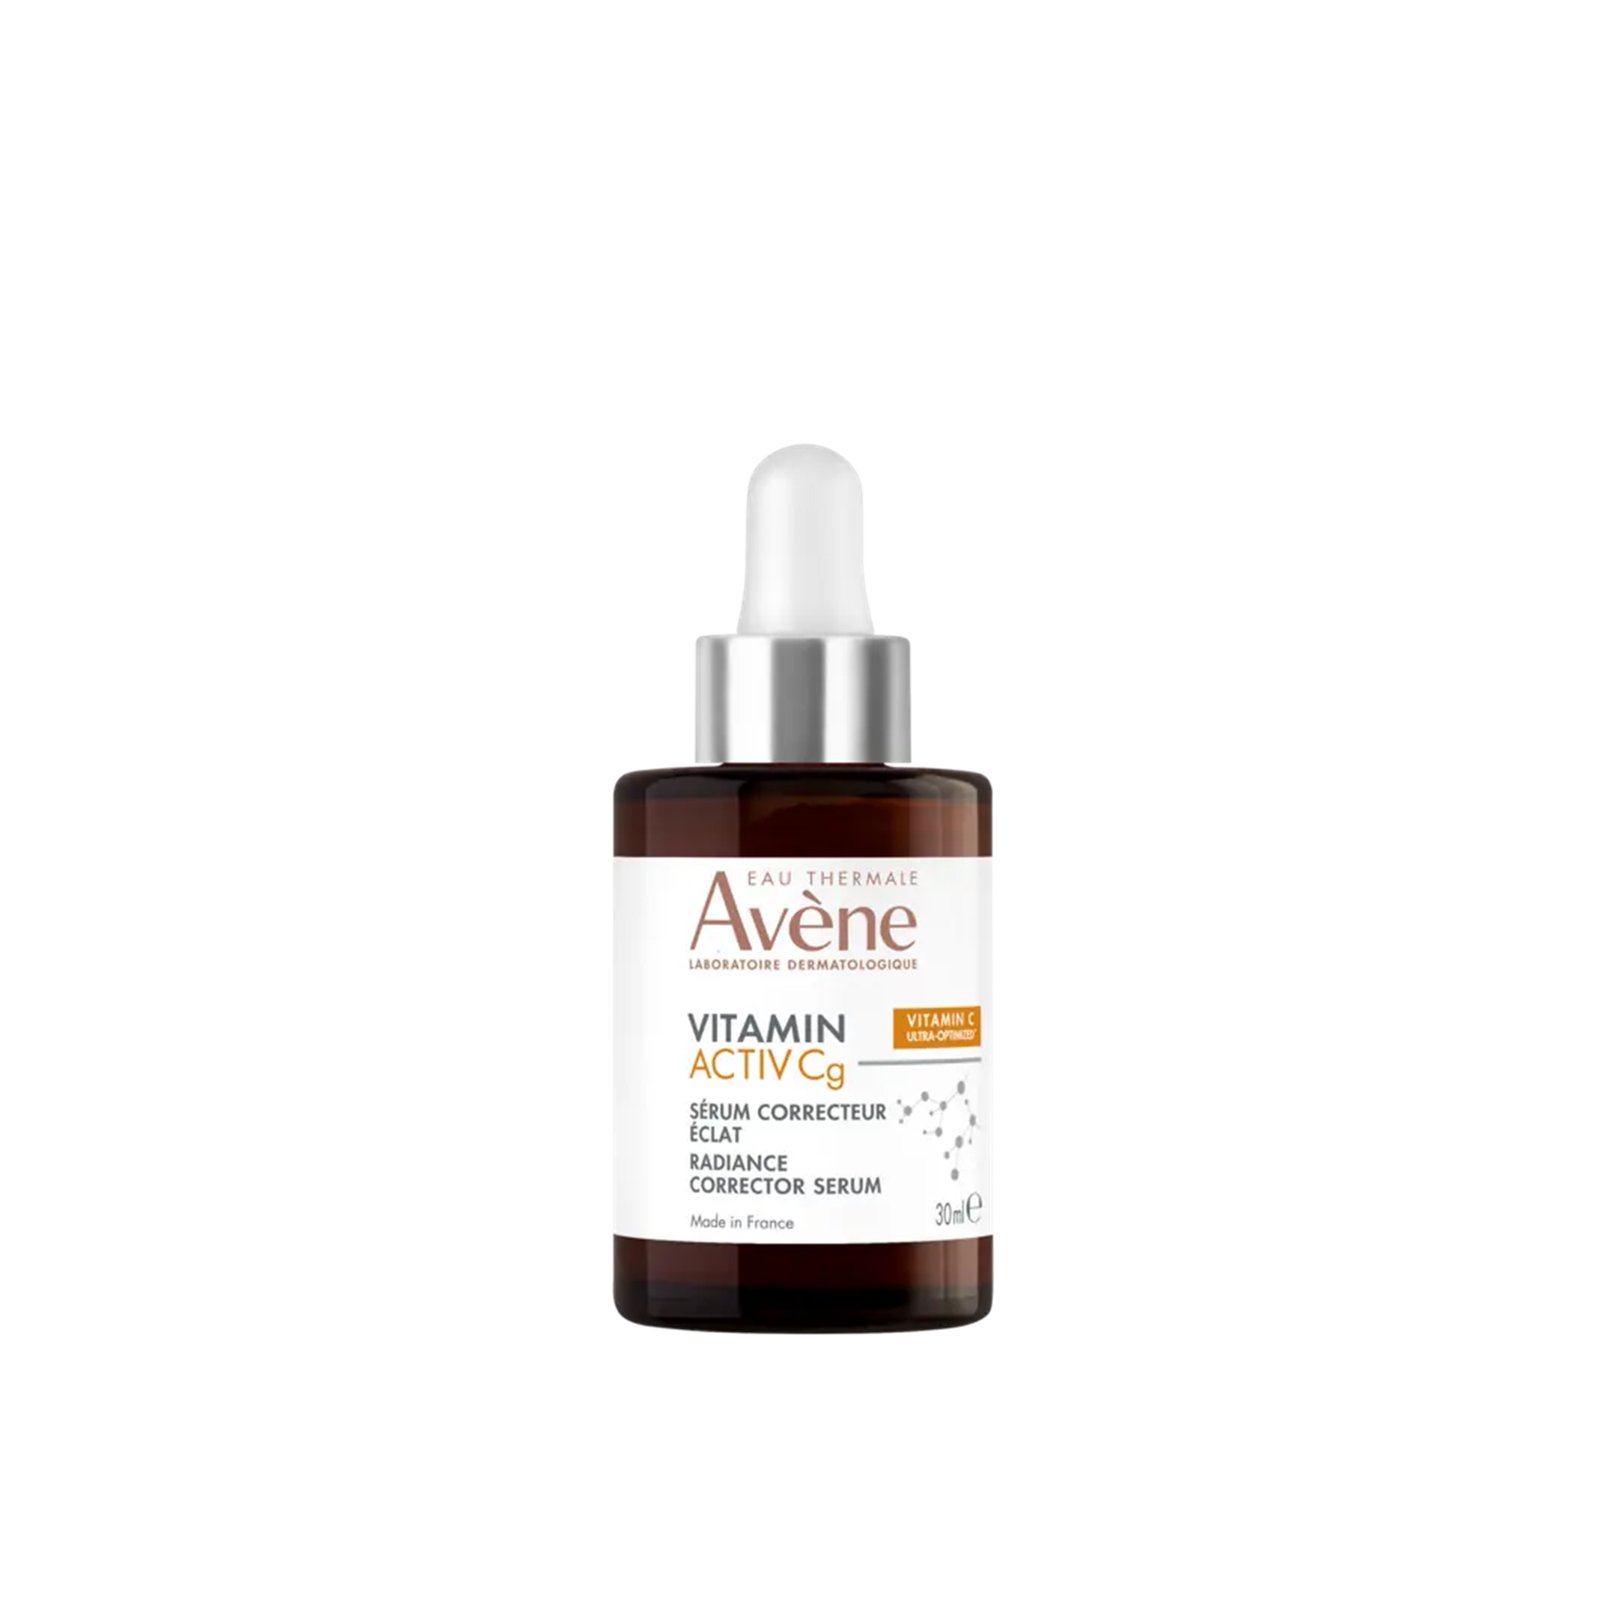 Buy Avène Vitamin Activ Cg Radiance Correcting Serum 30ml (1.01